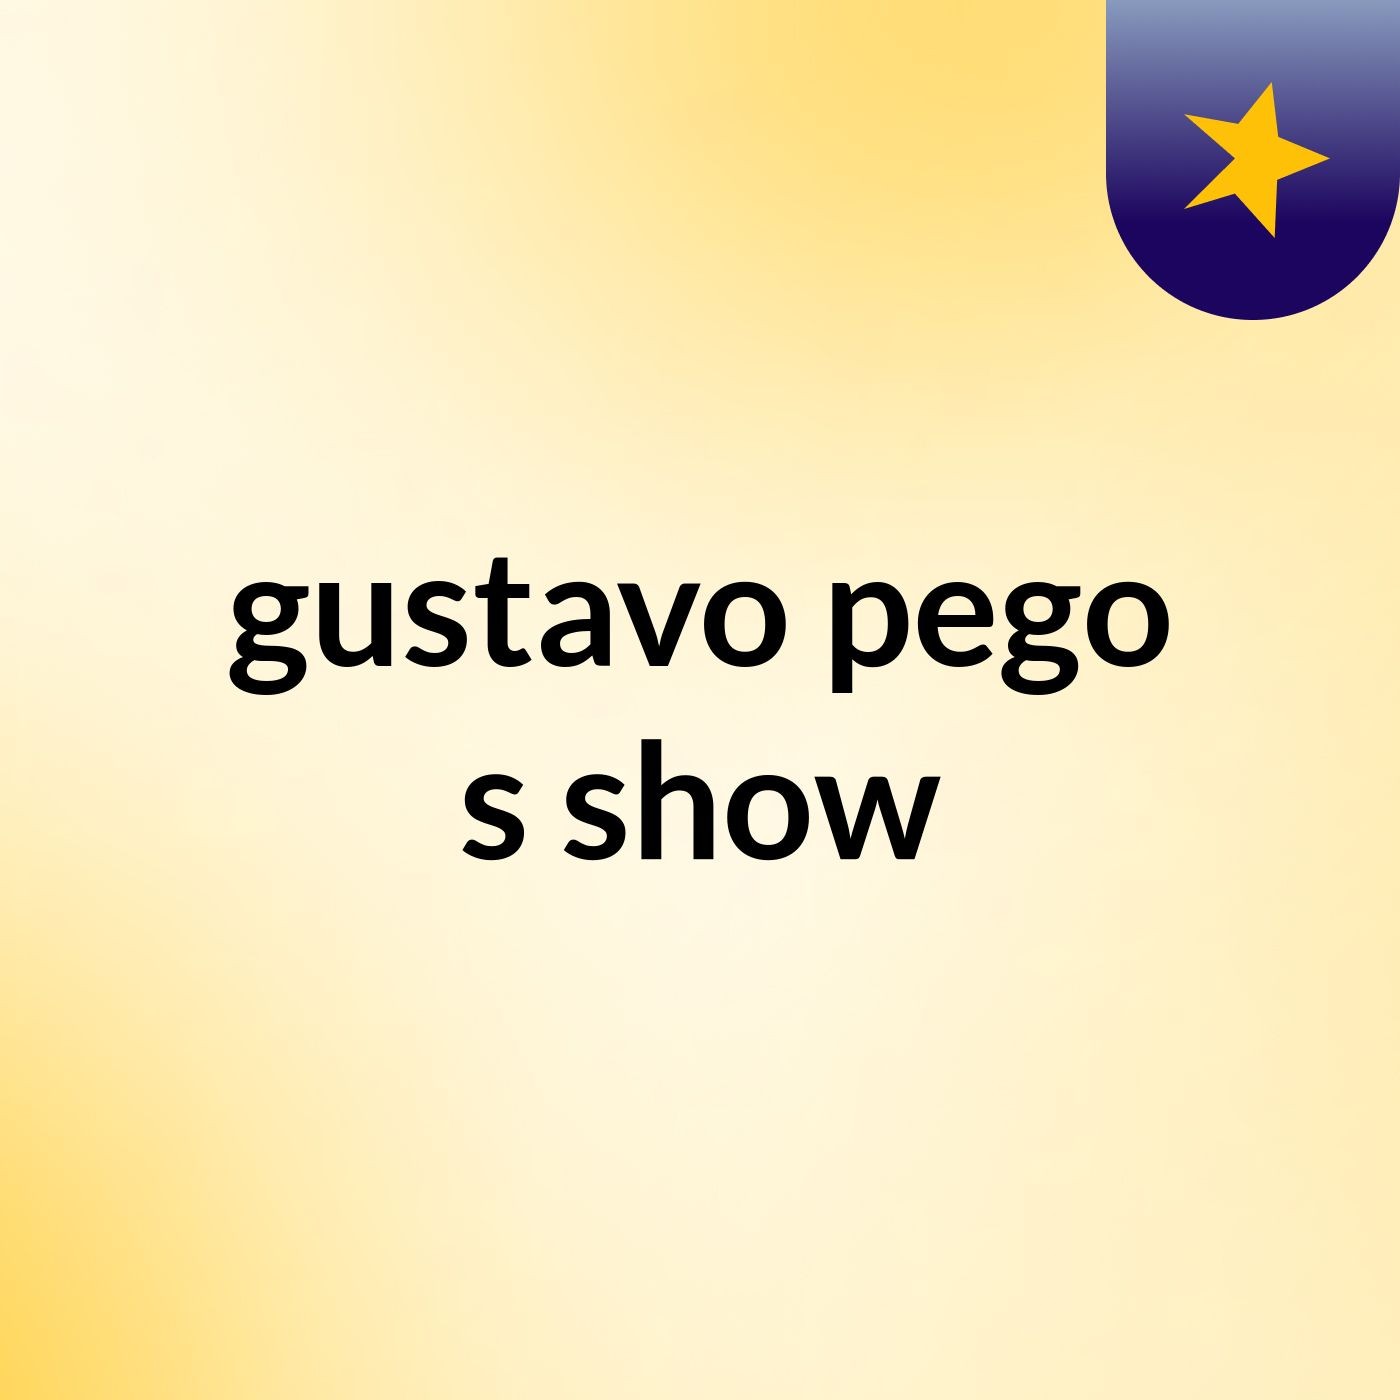 gustavo pego's show